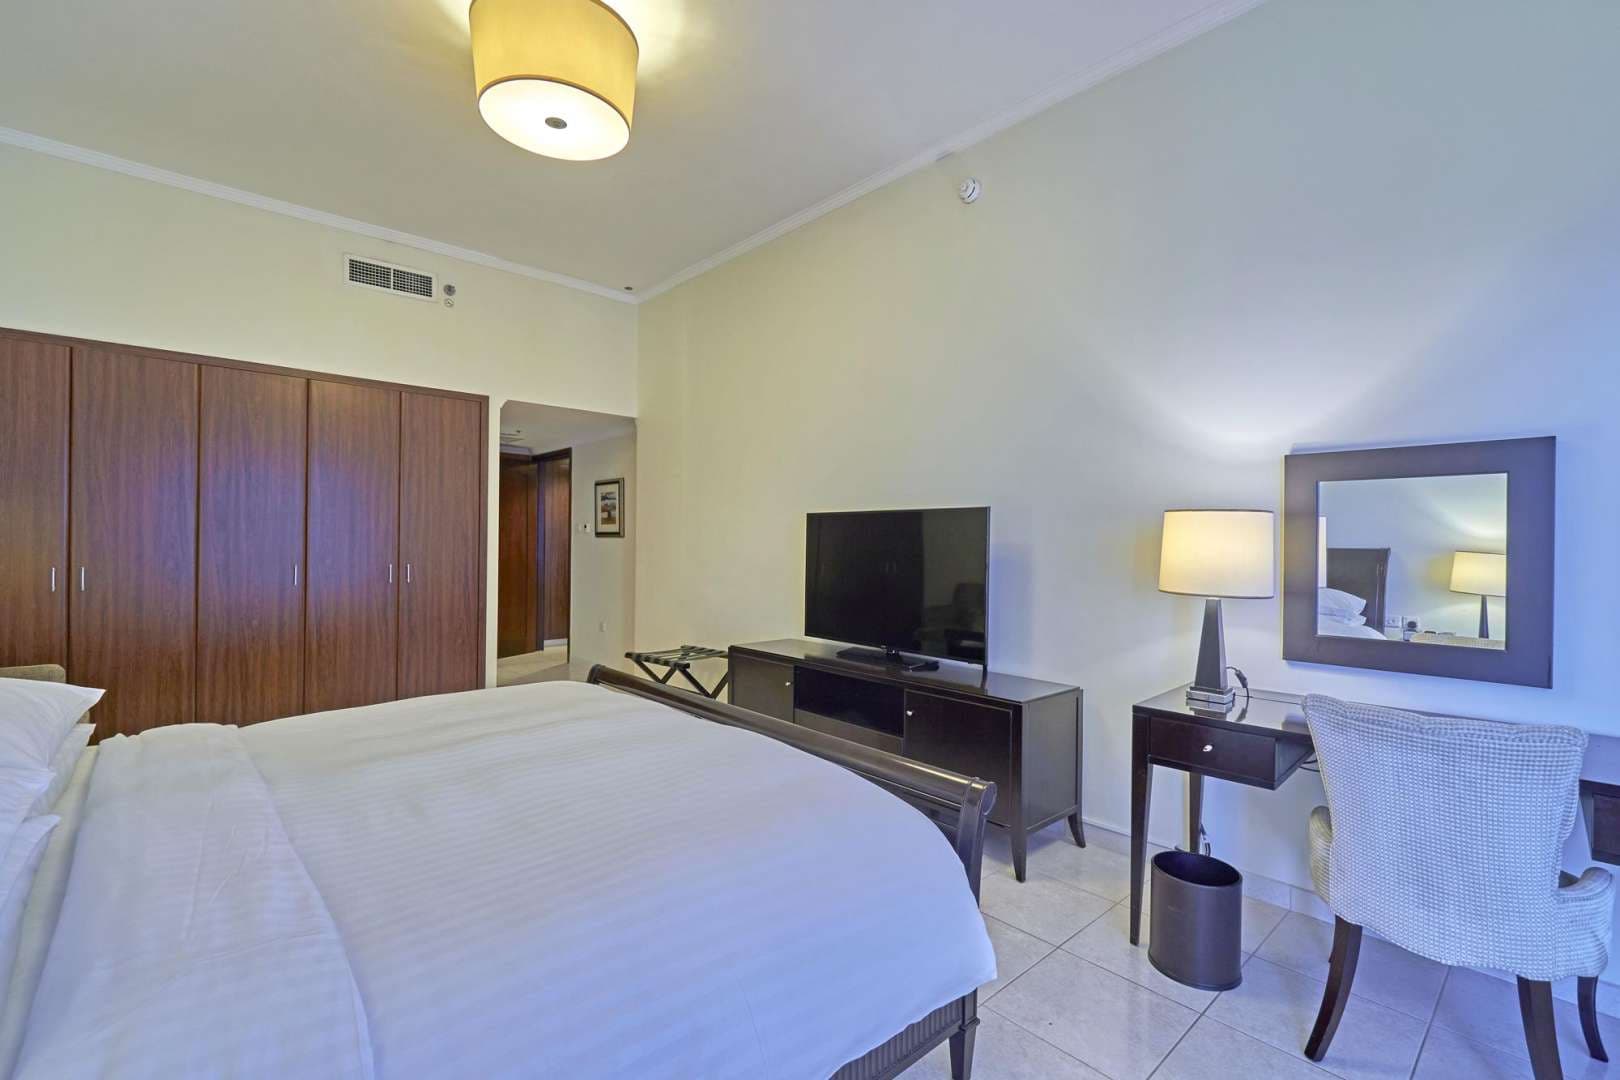 3 Bedroom Apartment For Short Term Marriott Harbour Hotel And Suites Lp05710 212f0c322741ce00.jpg